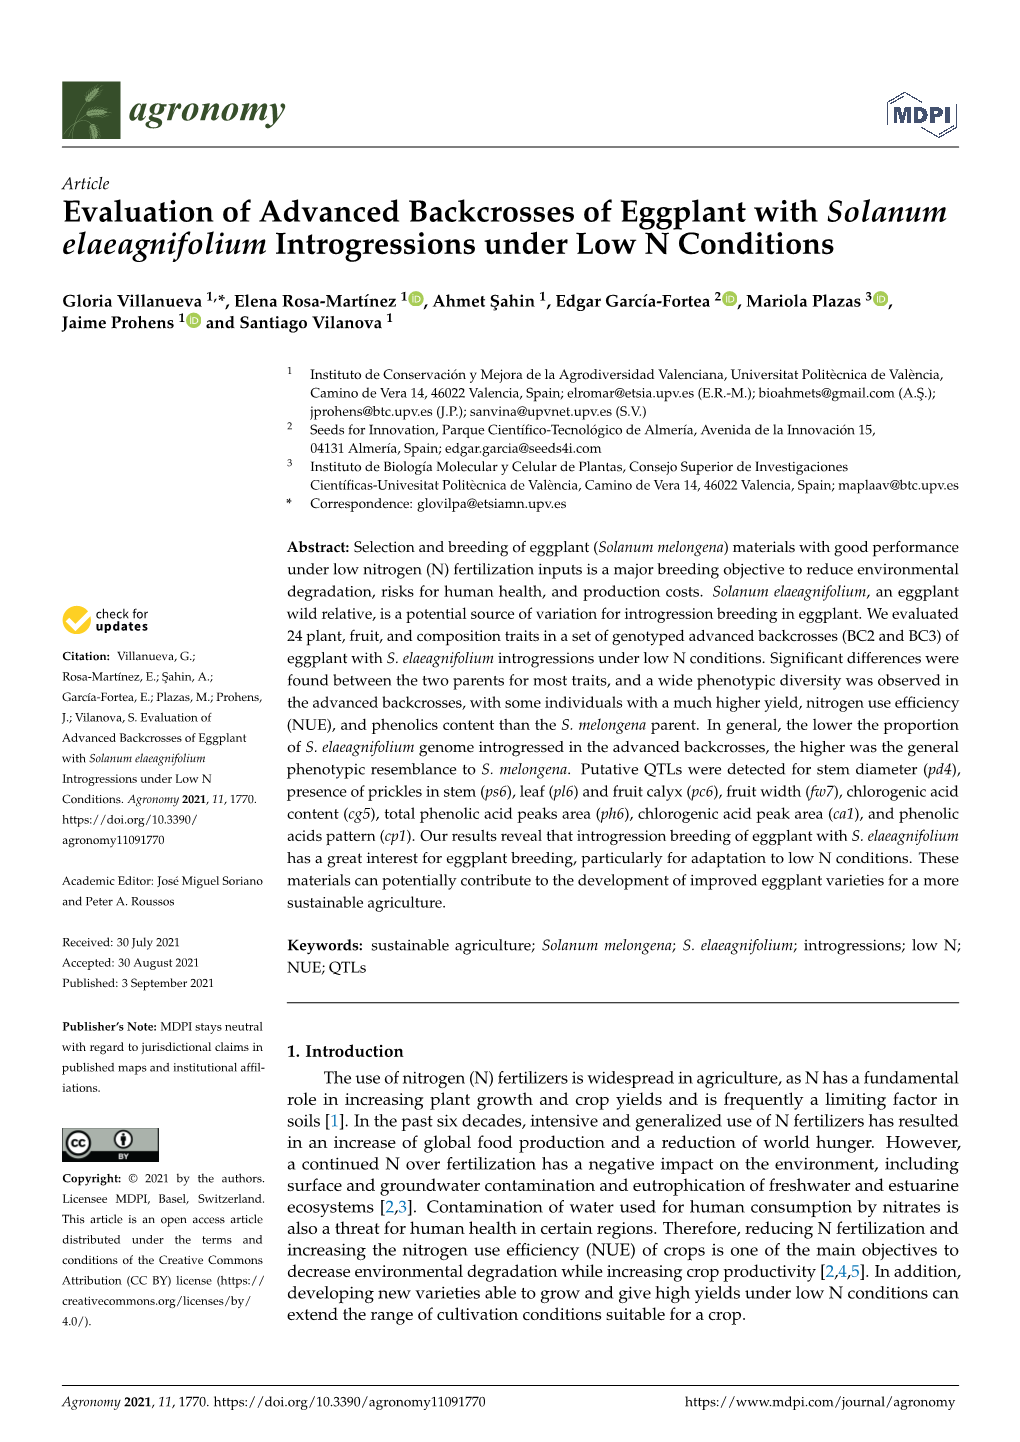 Evaluation of Advanced Backcrosses of Eggplant with Solanum Elaeagnifolium Introgressions Under Low N Conditions